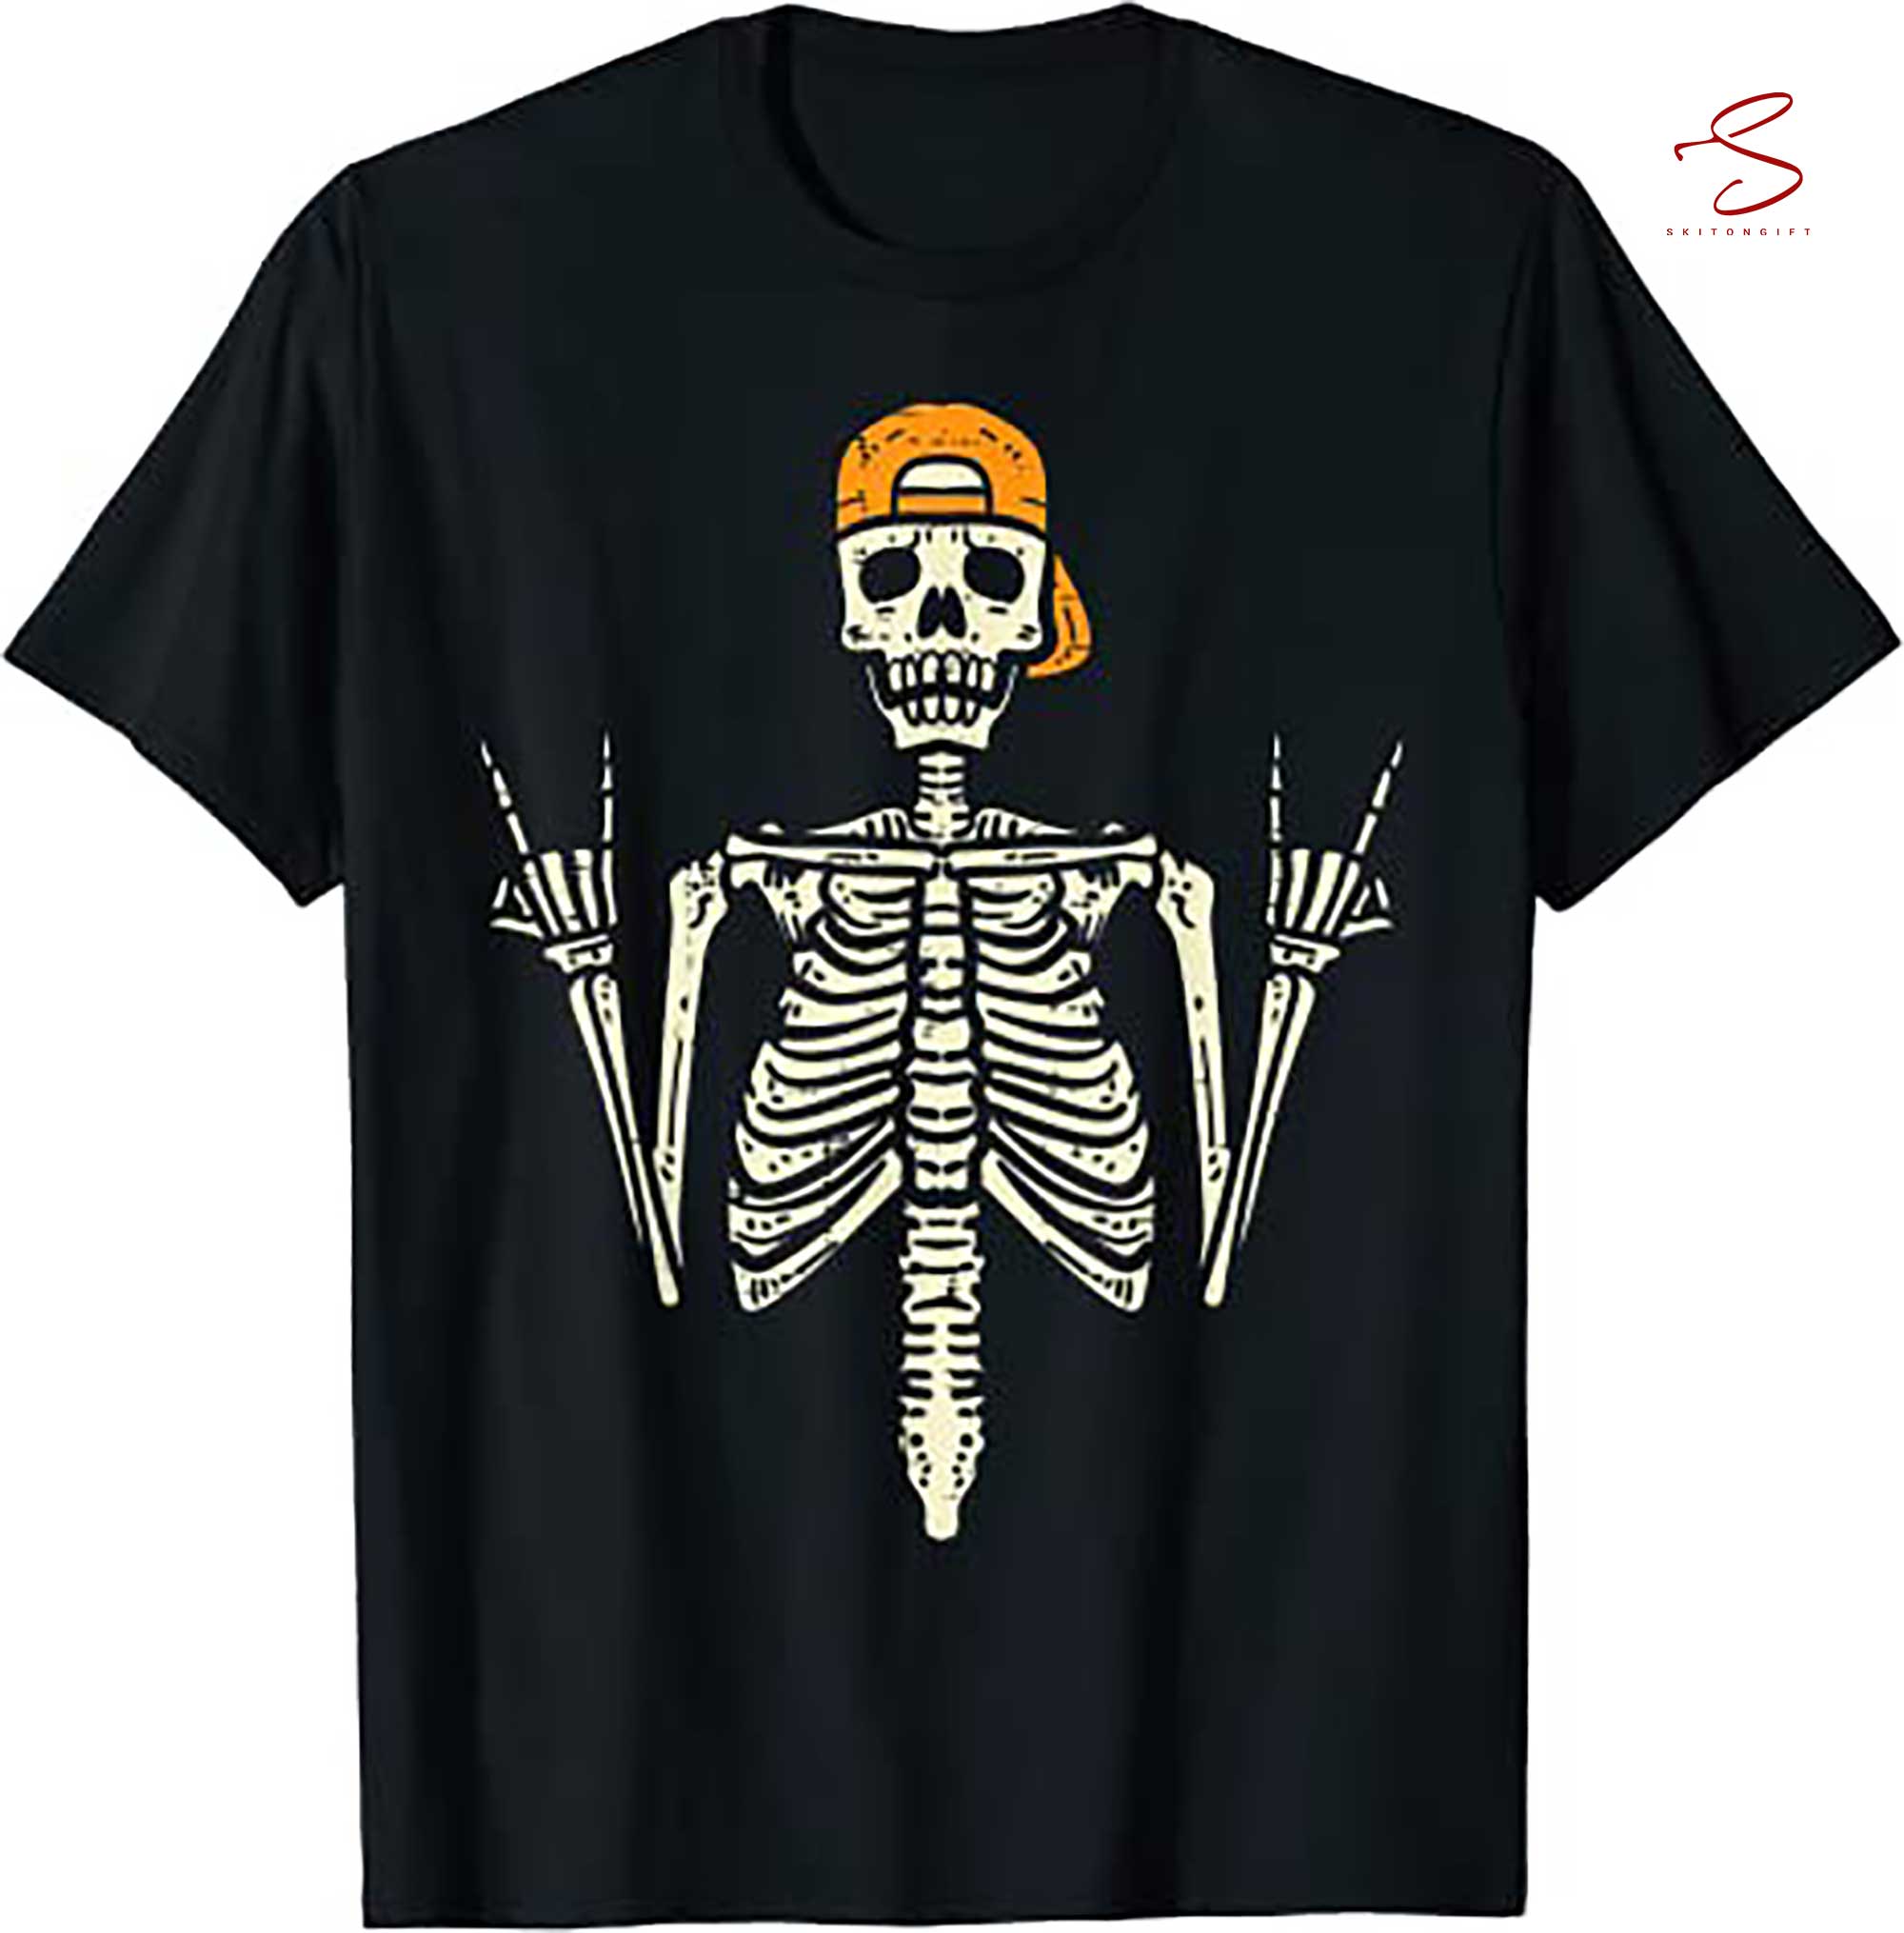 Skitongift Rocker Skater Skeleton Cap Halloween Punk Men Boys T Shirt